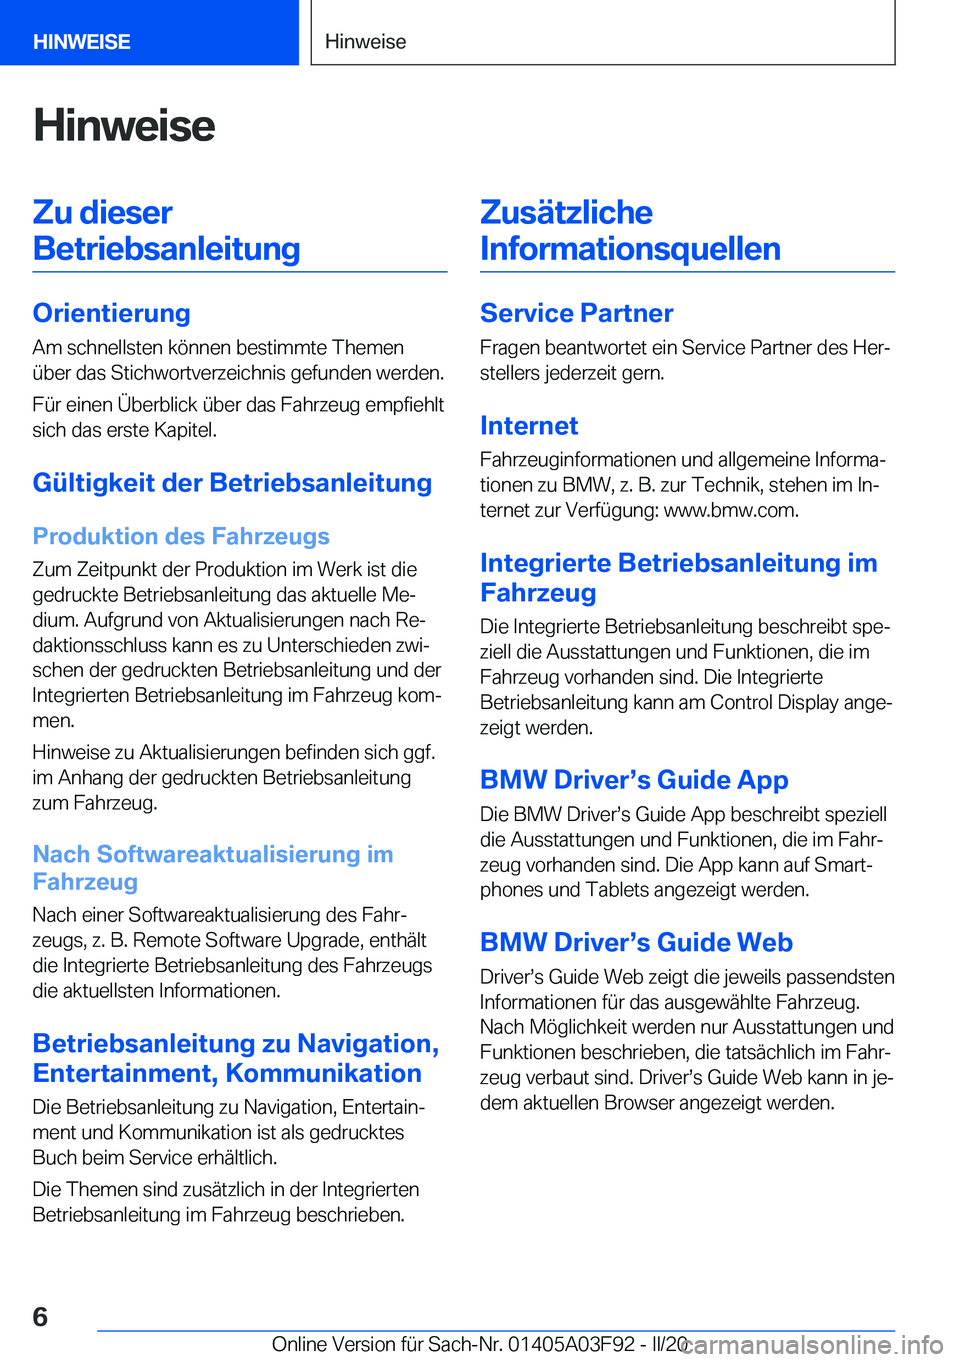 BMW 3 SERIES 2020  Betriebsanleitungen (in German) �H�i�n�w�e�i�s�e�Z�u��d�i�e�s�e�r�B�e�t�r�i�e�b�s�a�n�l�e�i�t�u�n�g
�O�r�i�e�n�t�i�e�r�u�n�g �A�m��s�c�h�n�e�l�l�s�t�e�n��k�